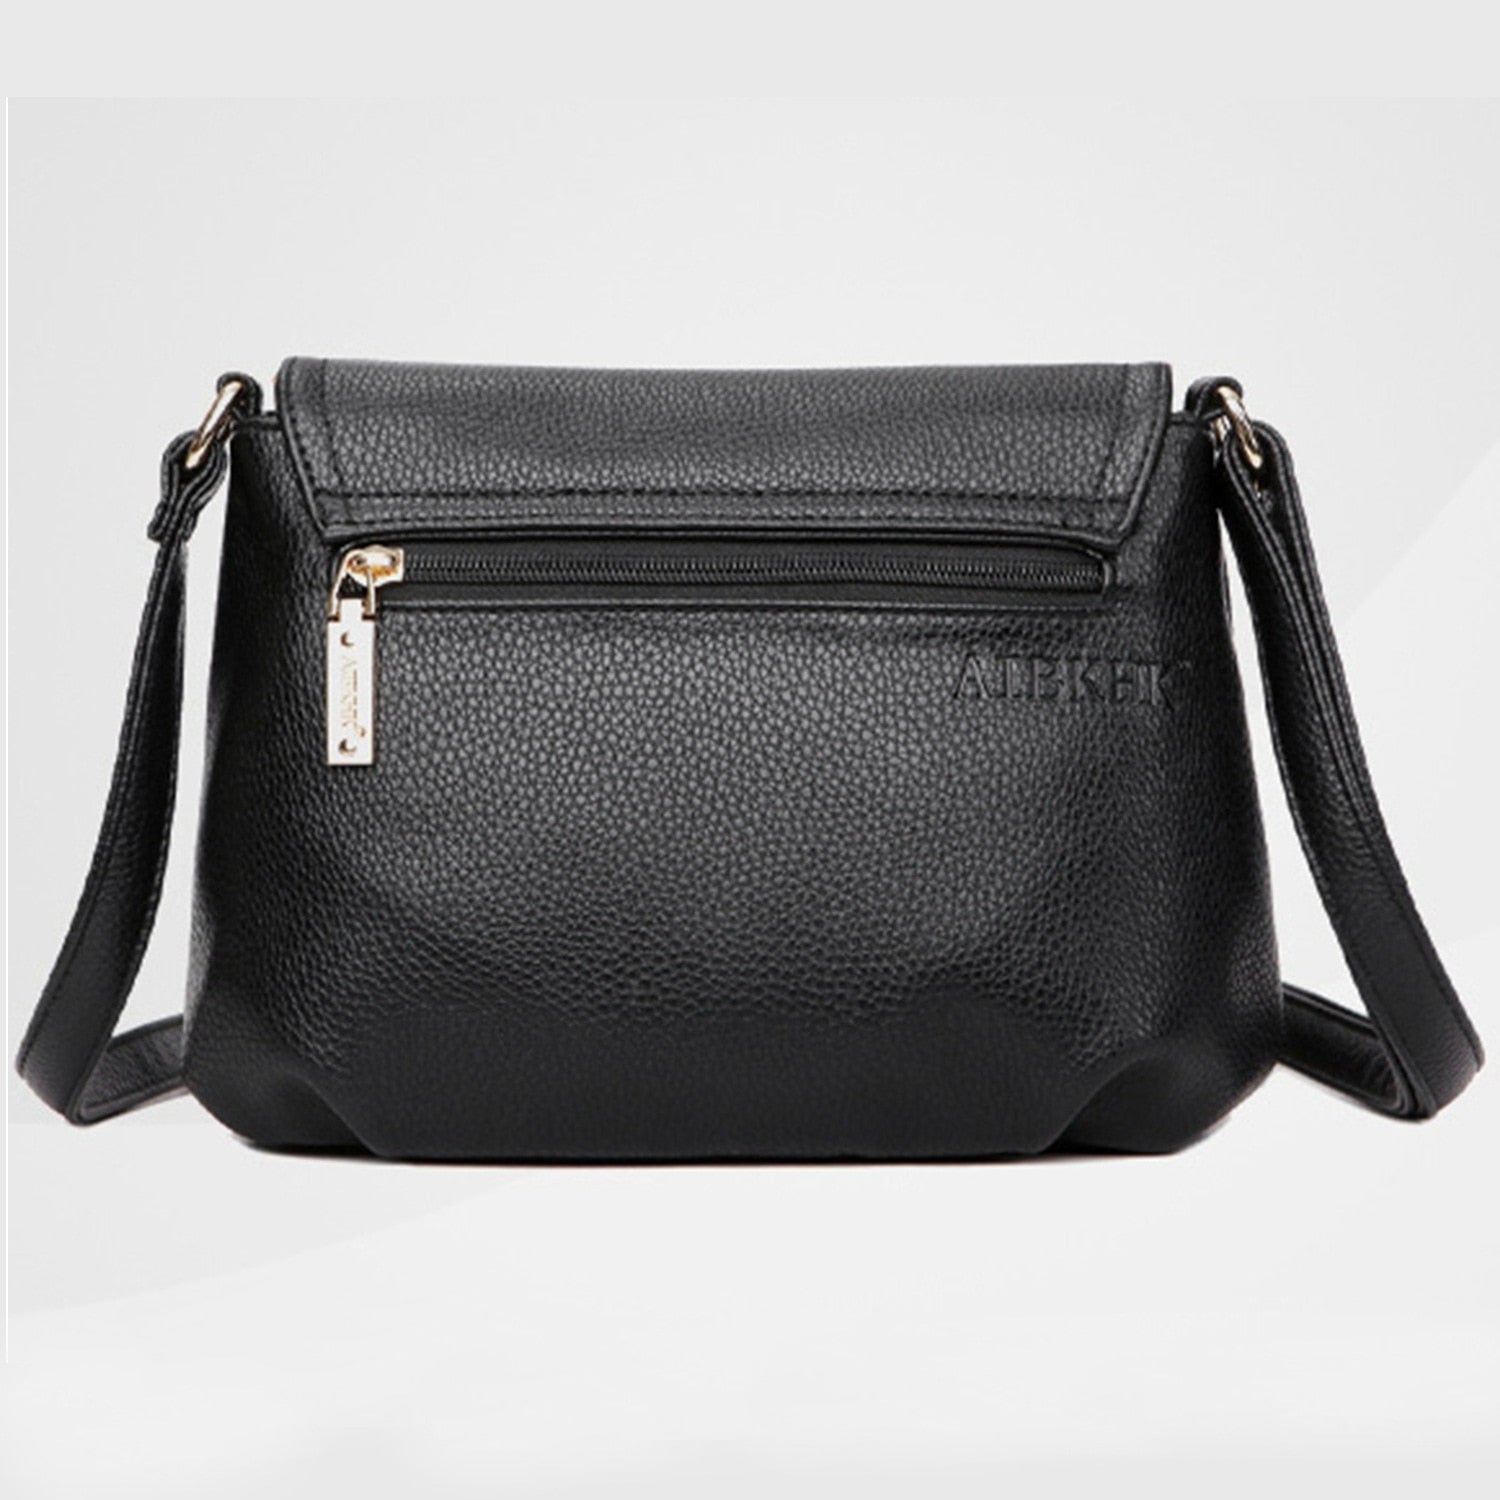 Aibkhk Fashion Women Small Bags Genuine Leather Vintage Ladies Handbag/Women Messenger Shoulder Bags/Crossbody Bag - ebowsos